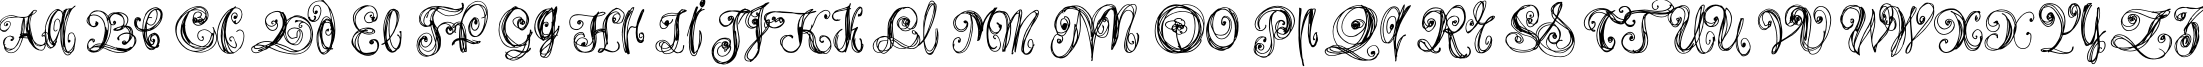 Пример написания английского алфавита шрифтом Airy